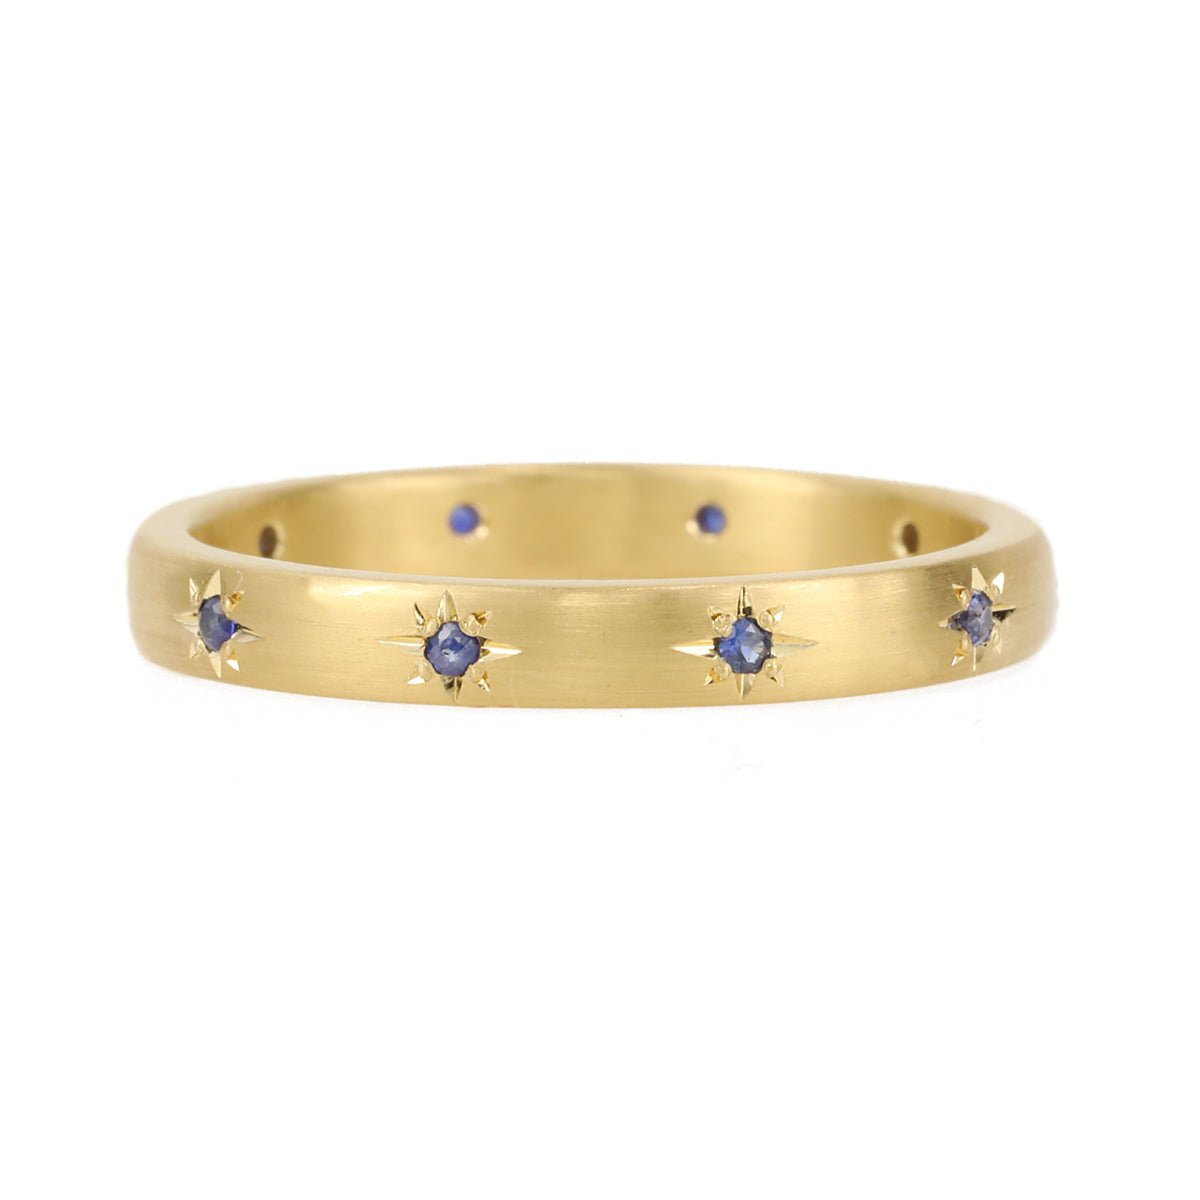 Caroline Ellen 20K Gold Narrow Slightly Rounded Ring with 10 Star-Set Blue Sapphires